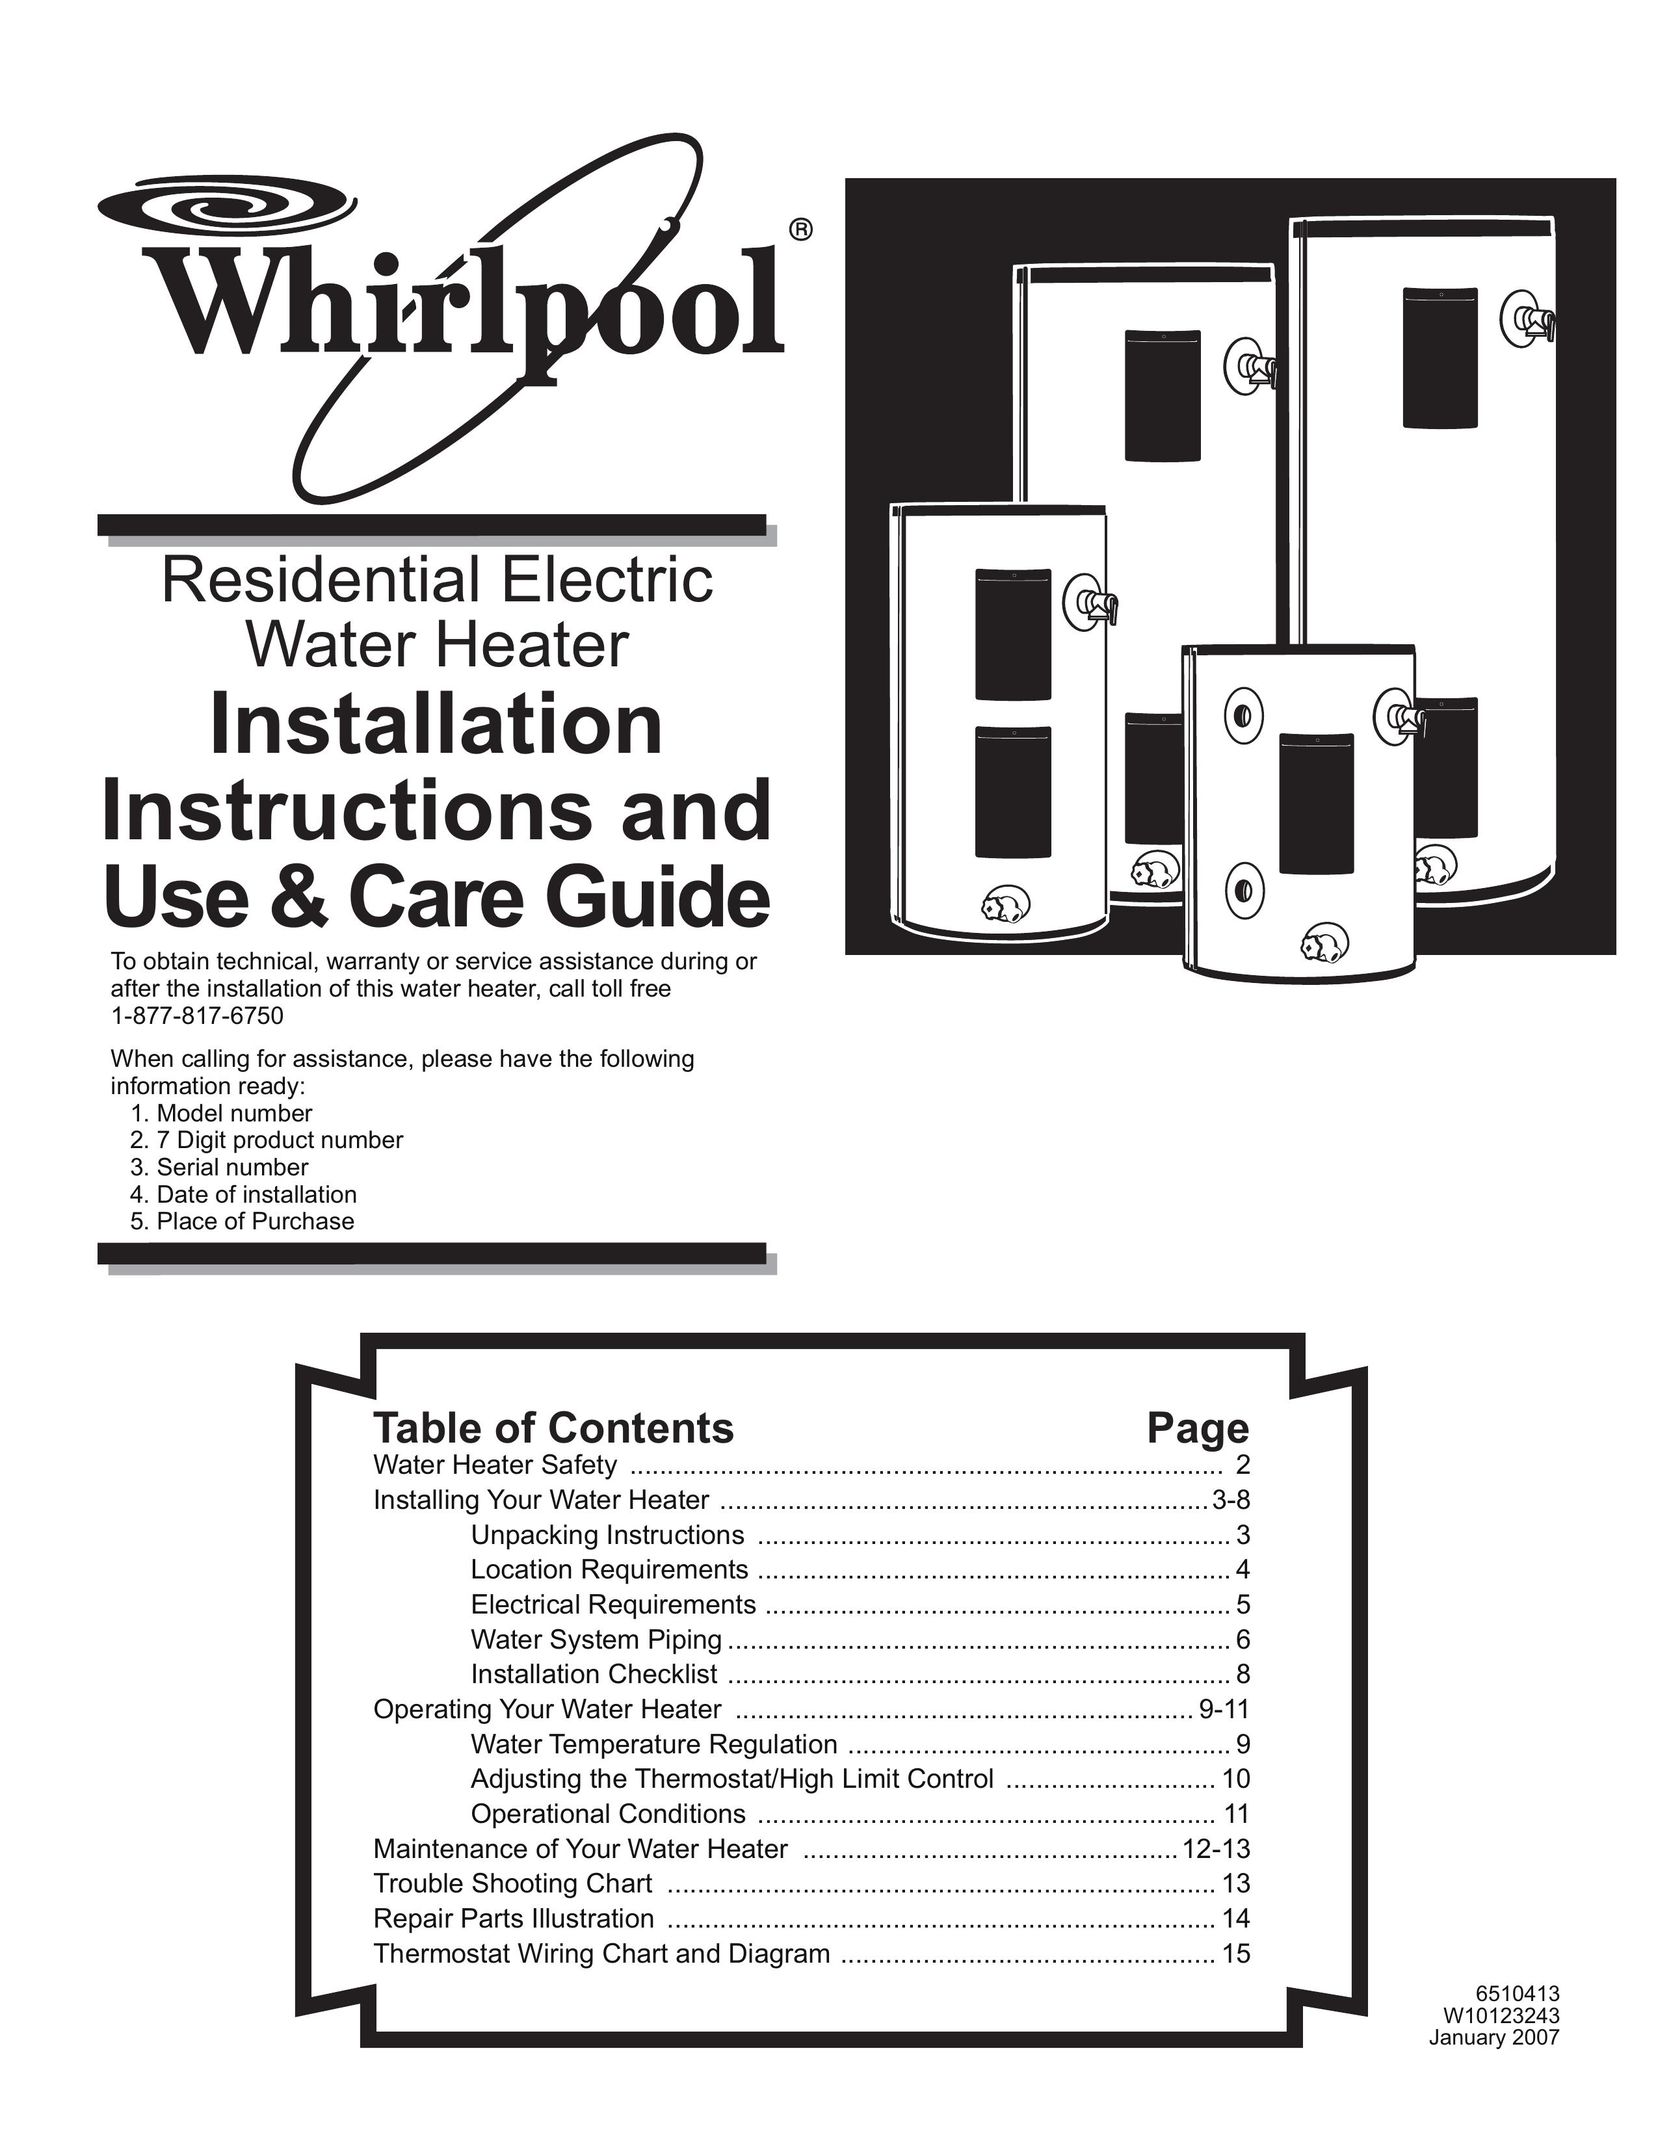 Whirlpool 140452 Water Heater User Manual